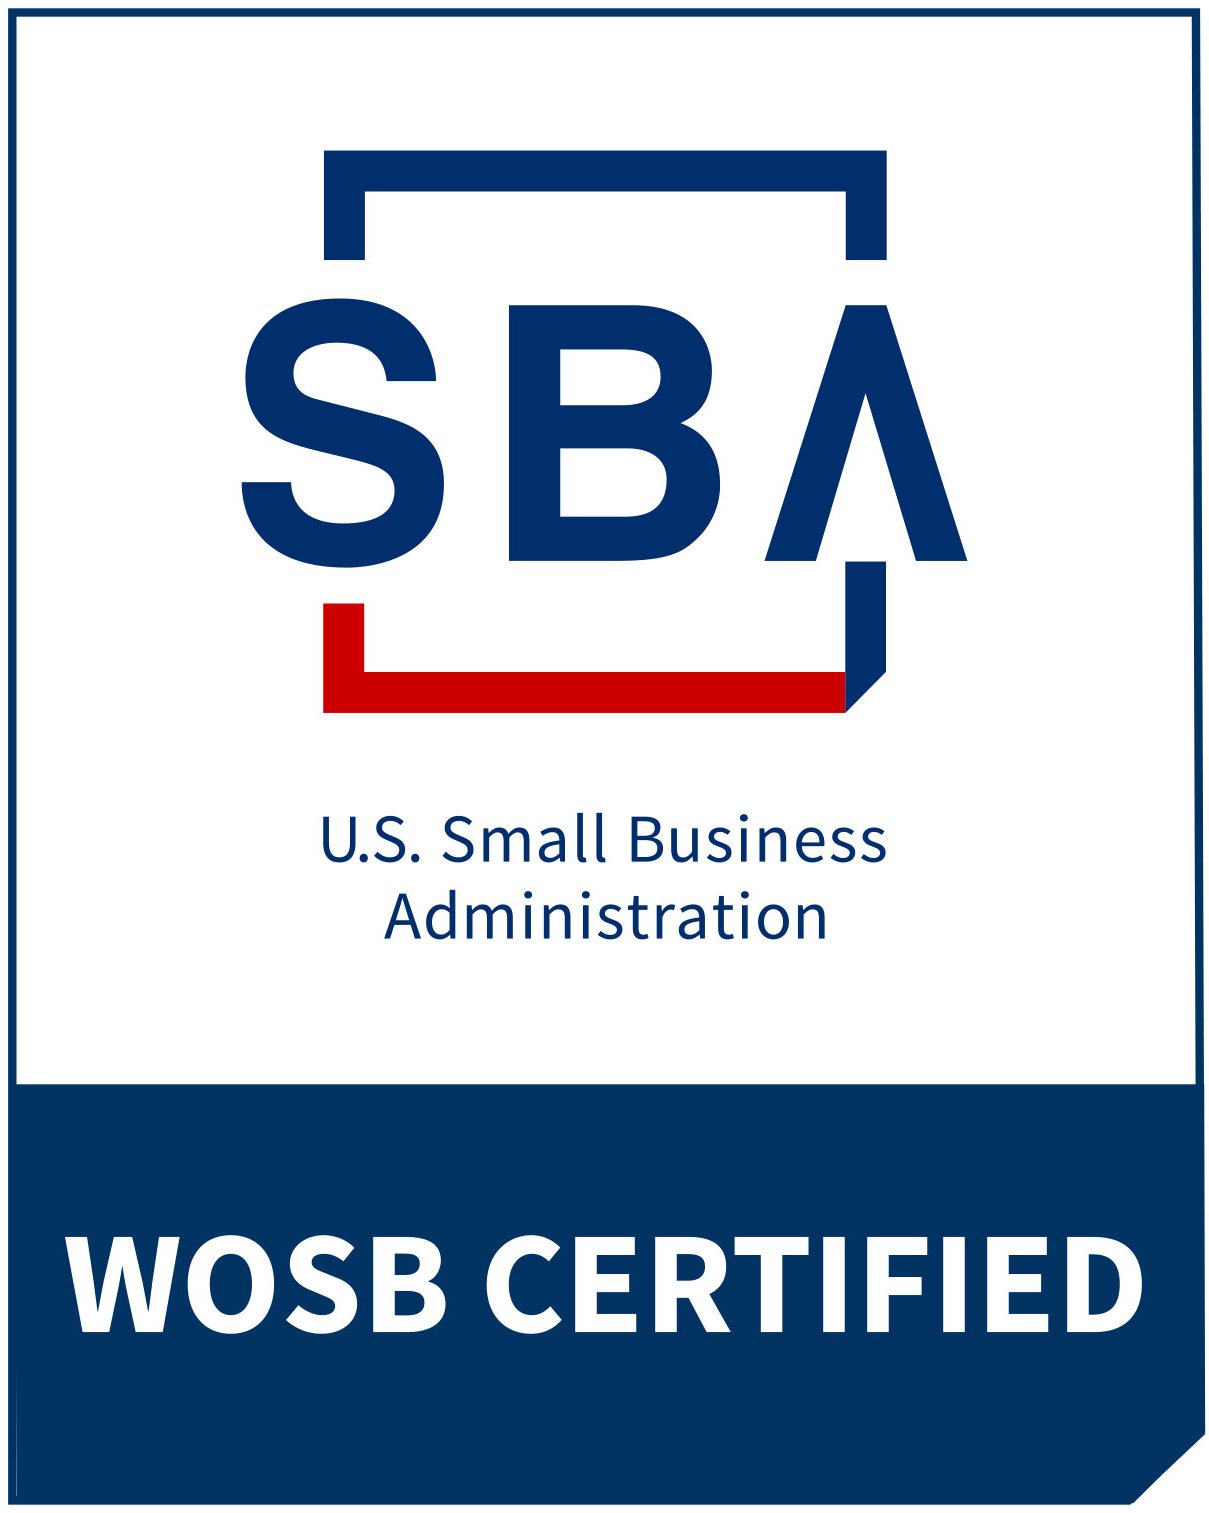 WOSB-Certified.jpg